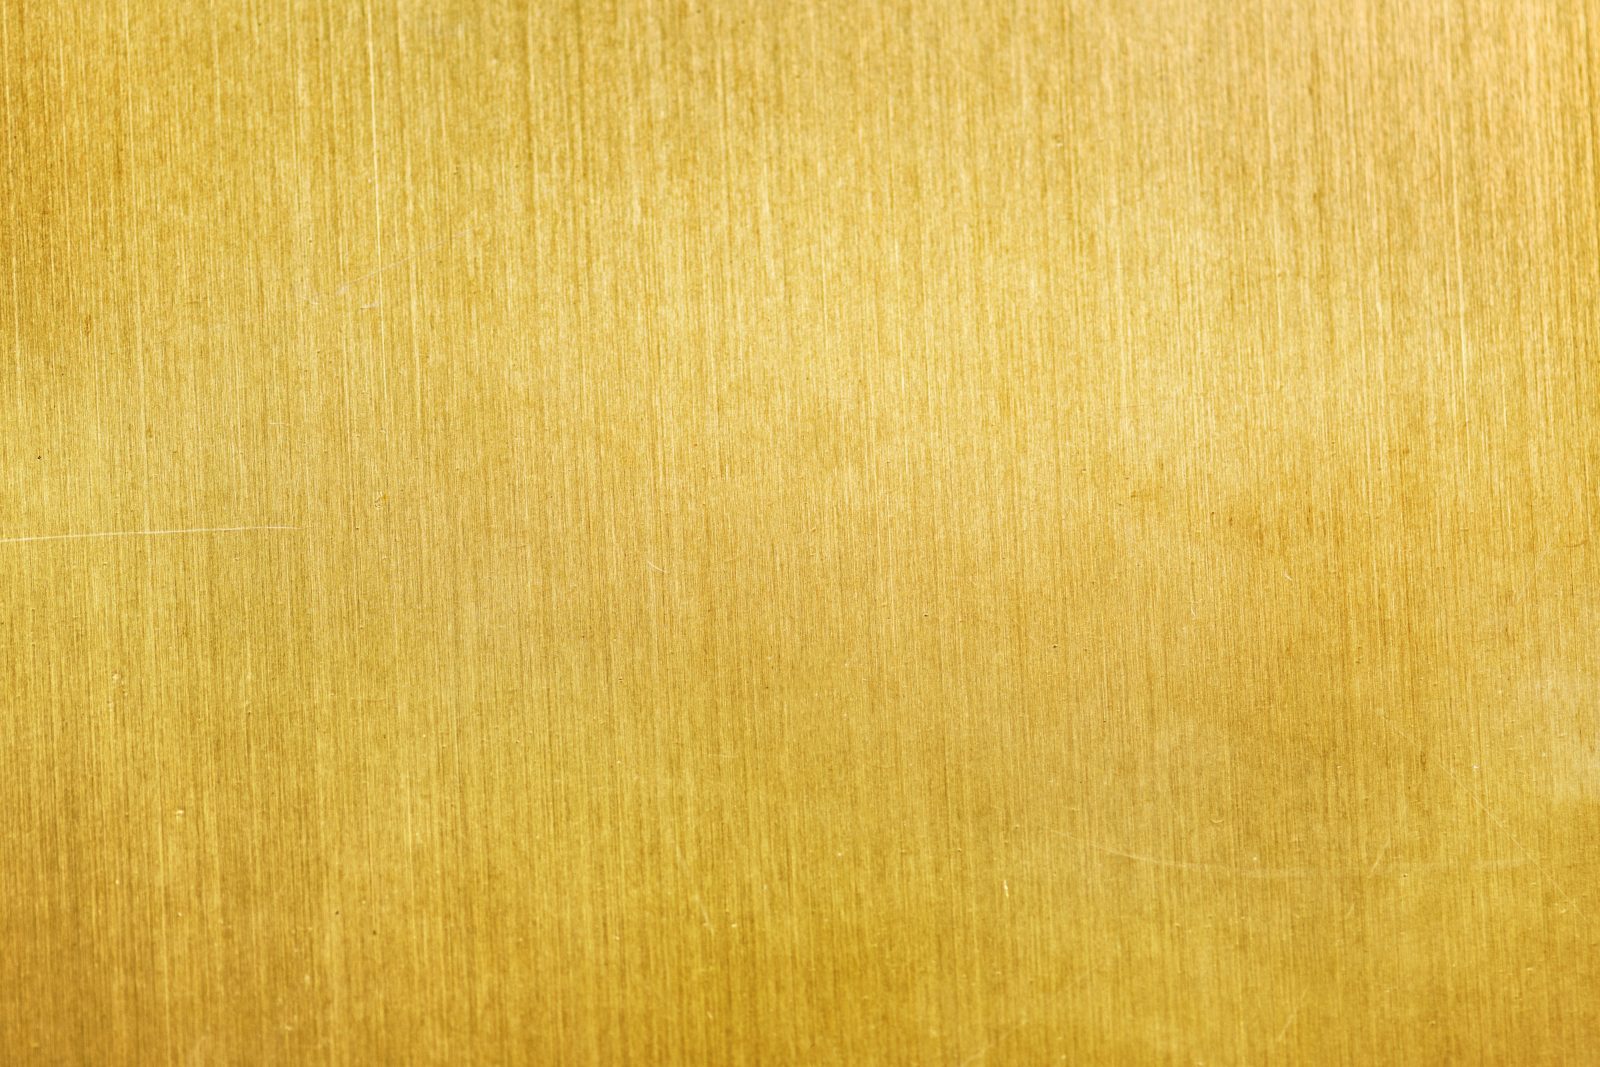 gold foil wallpaper,yellow,wood,orange,brown,beige